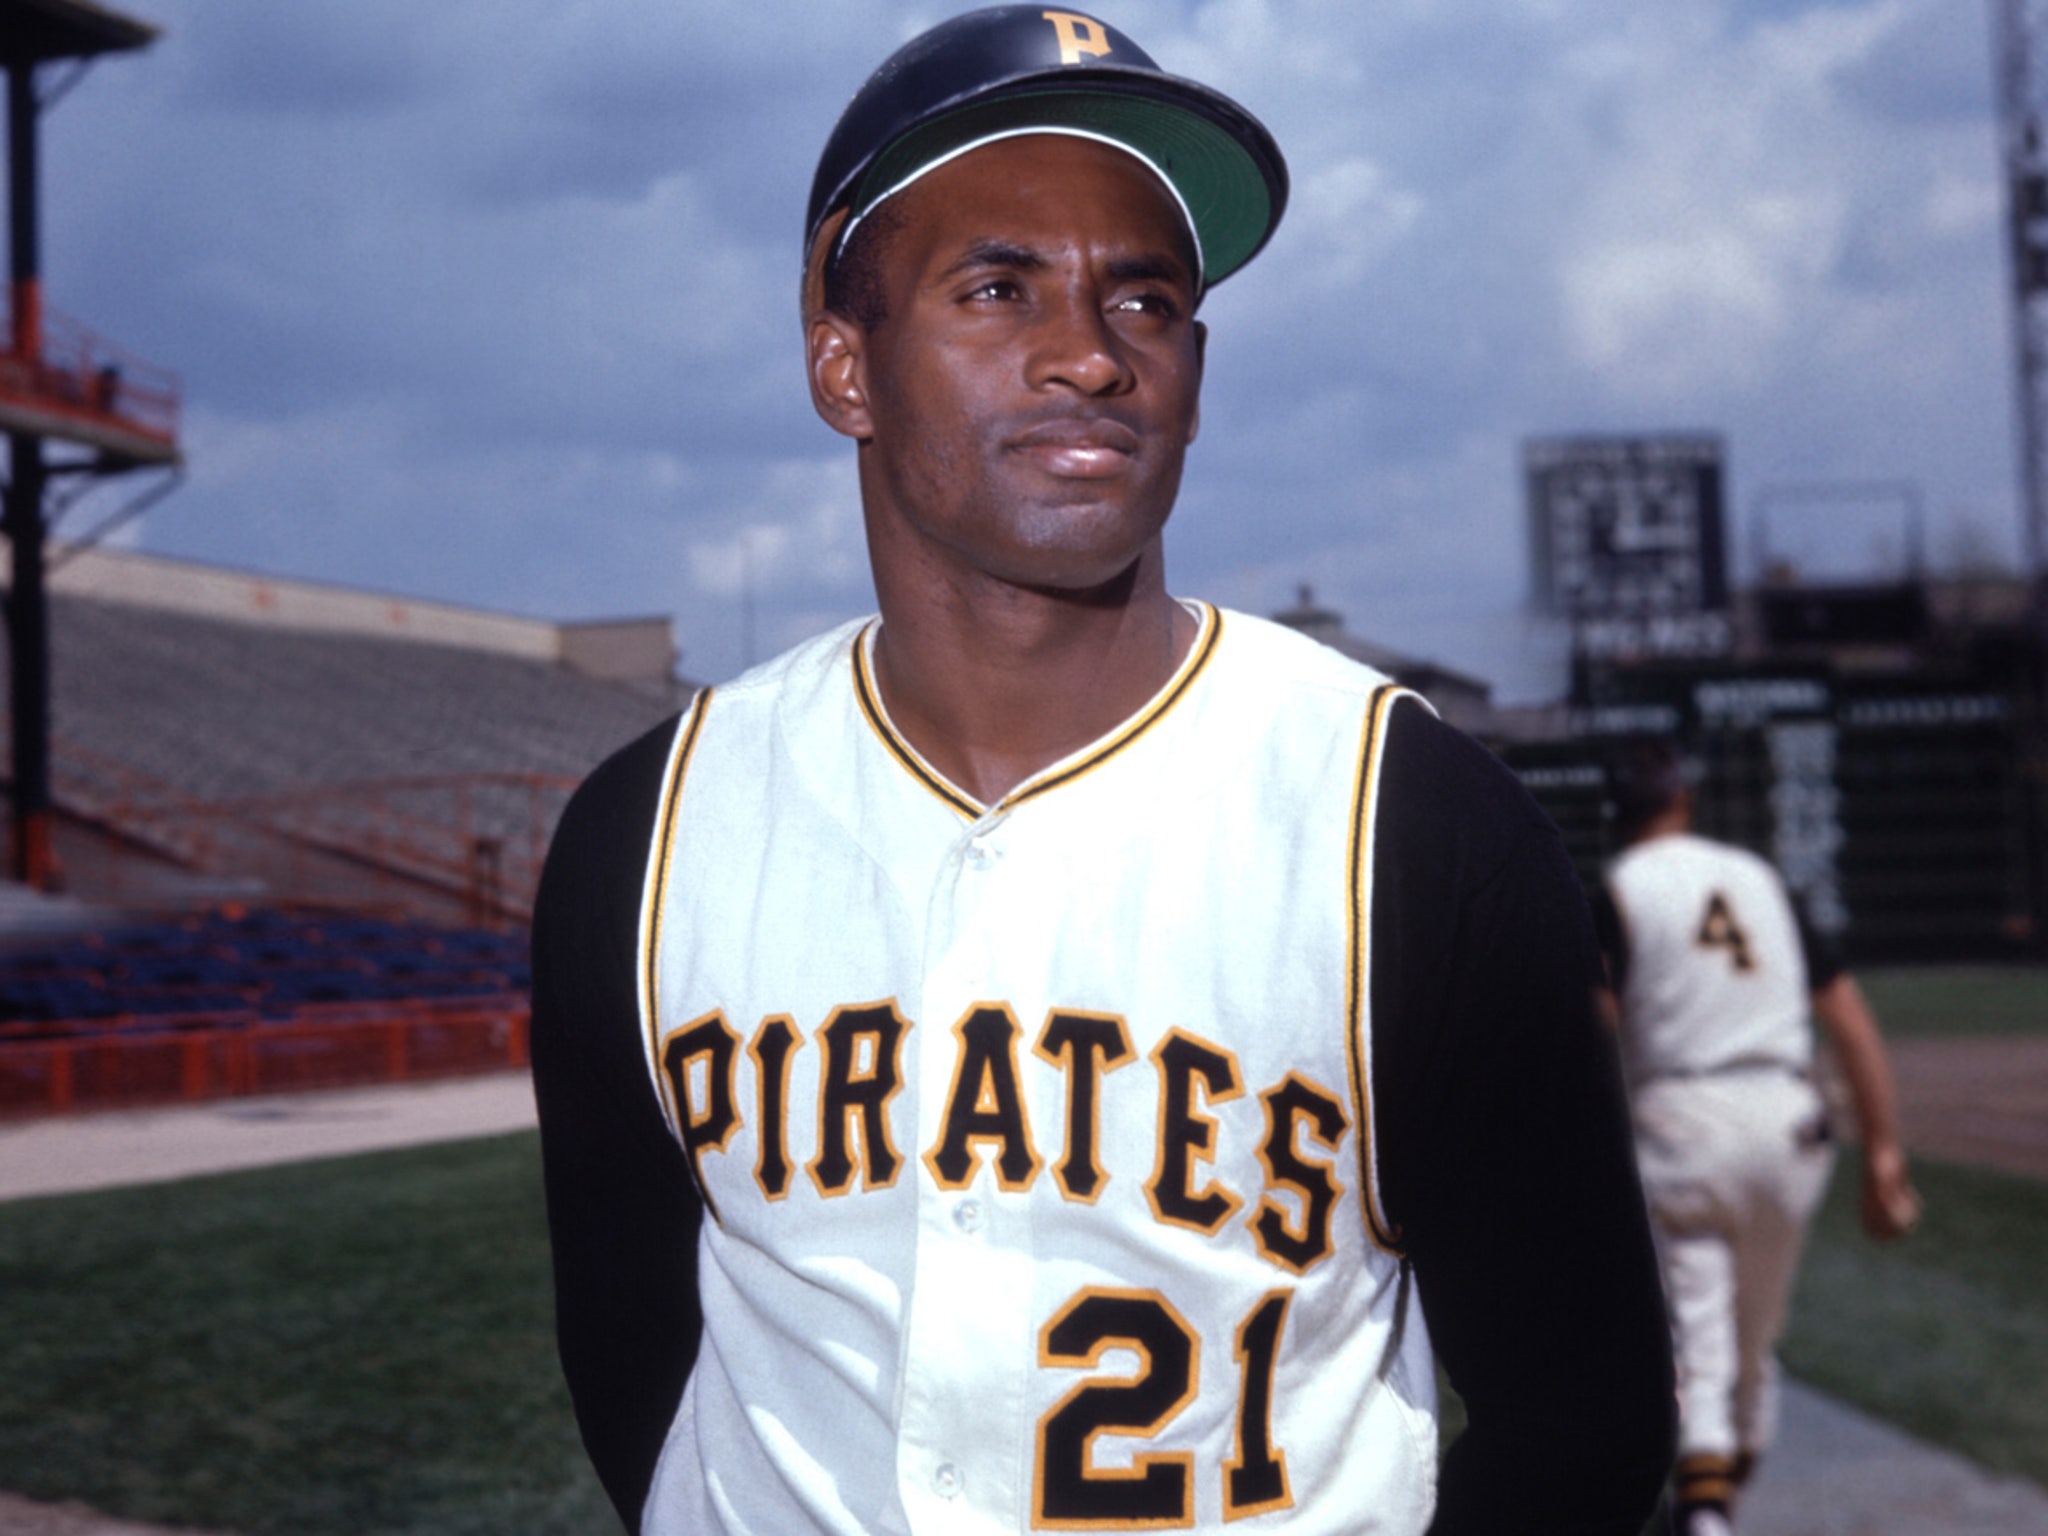 Roberto Clemente 1966 Pittsburgh Pirates Home Uniform